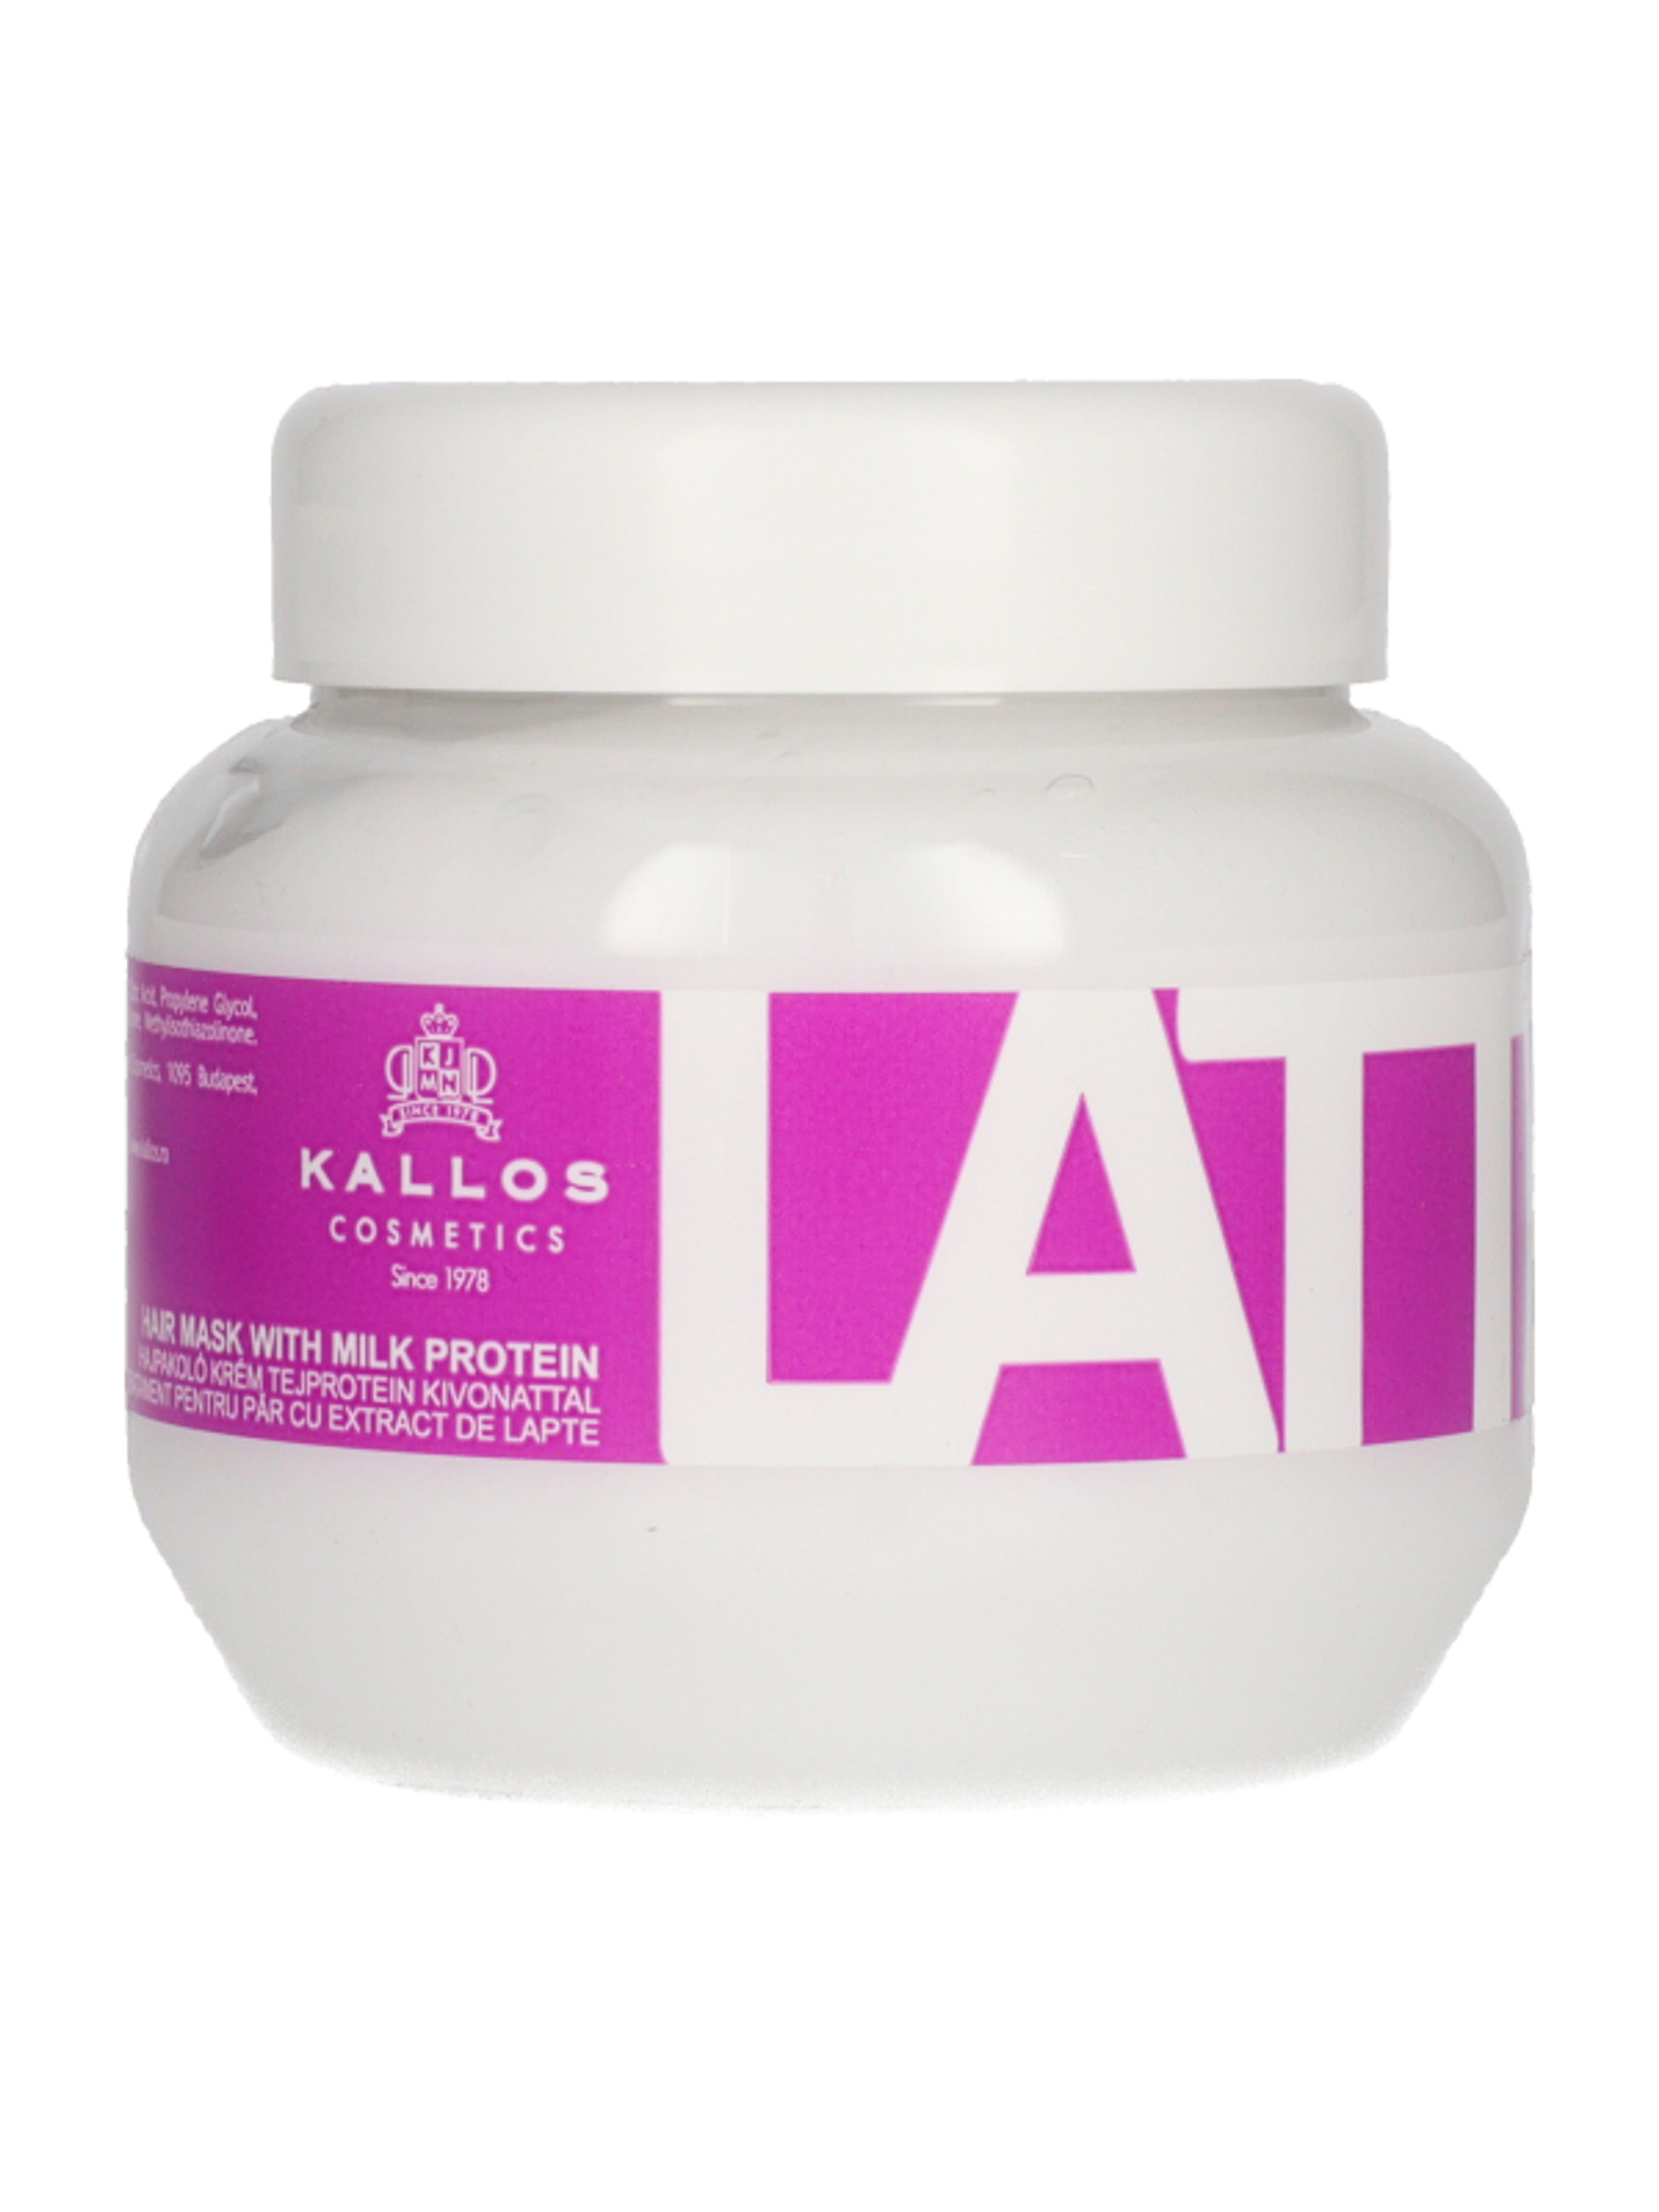 Kallos Latte hajpakoló kérm tejprotein kivonattal - 275 ml